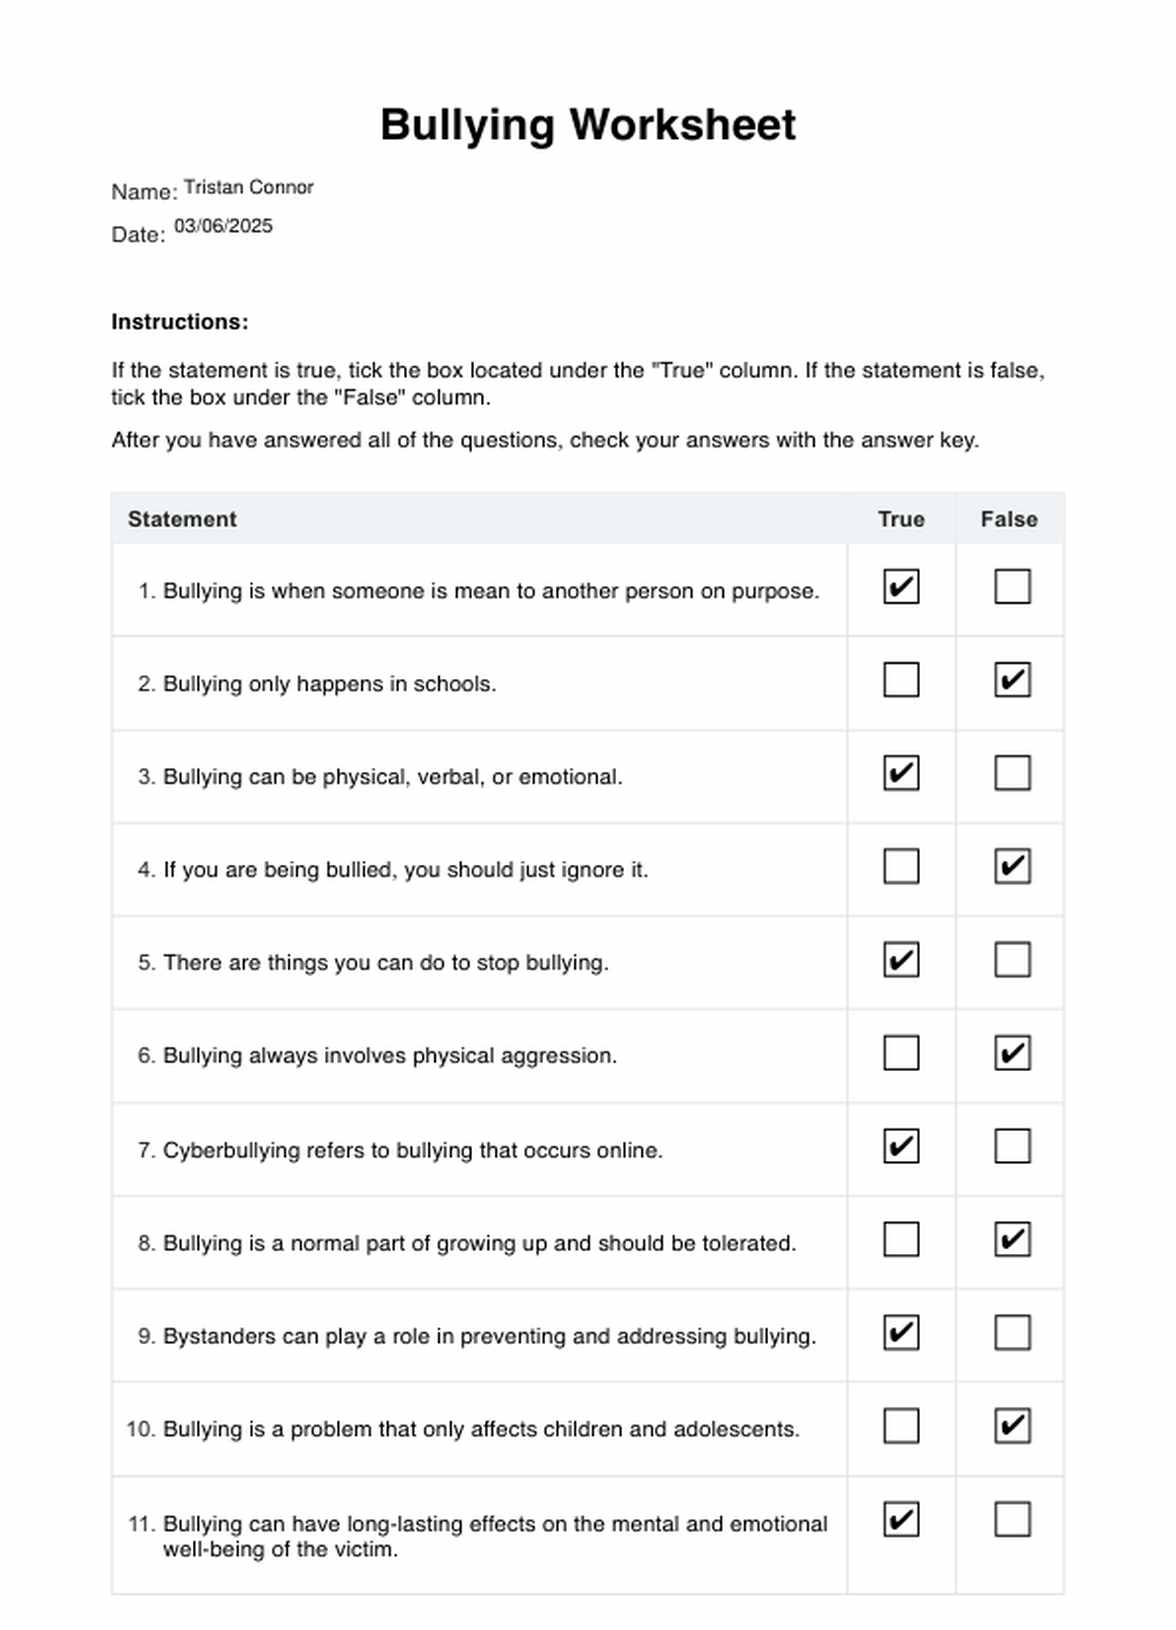 Bullying Worksheet PDF Example